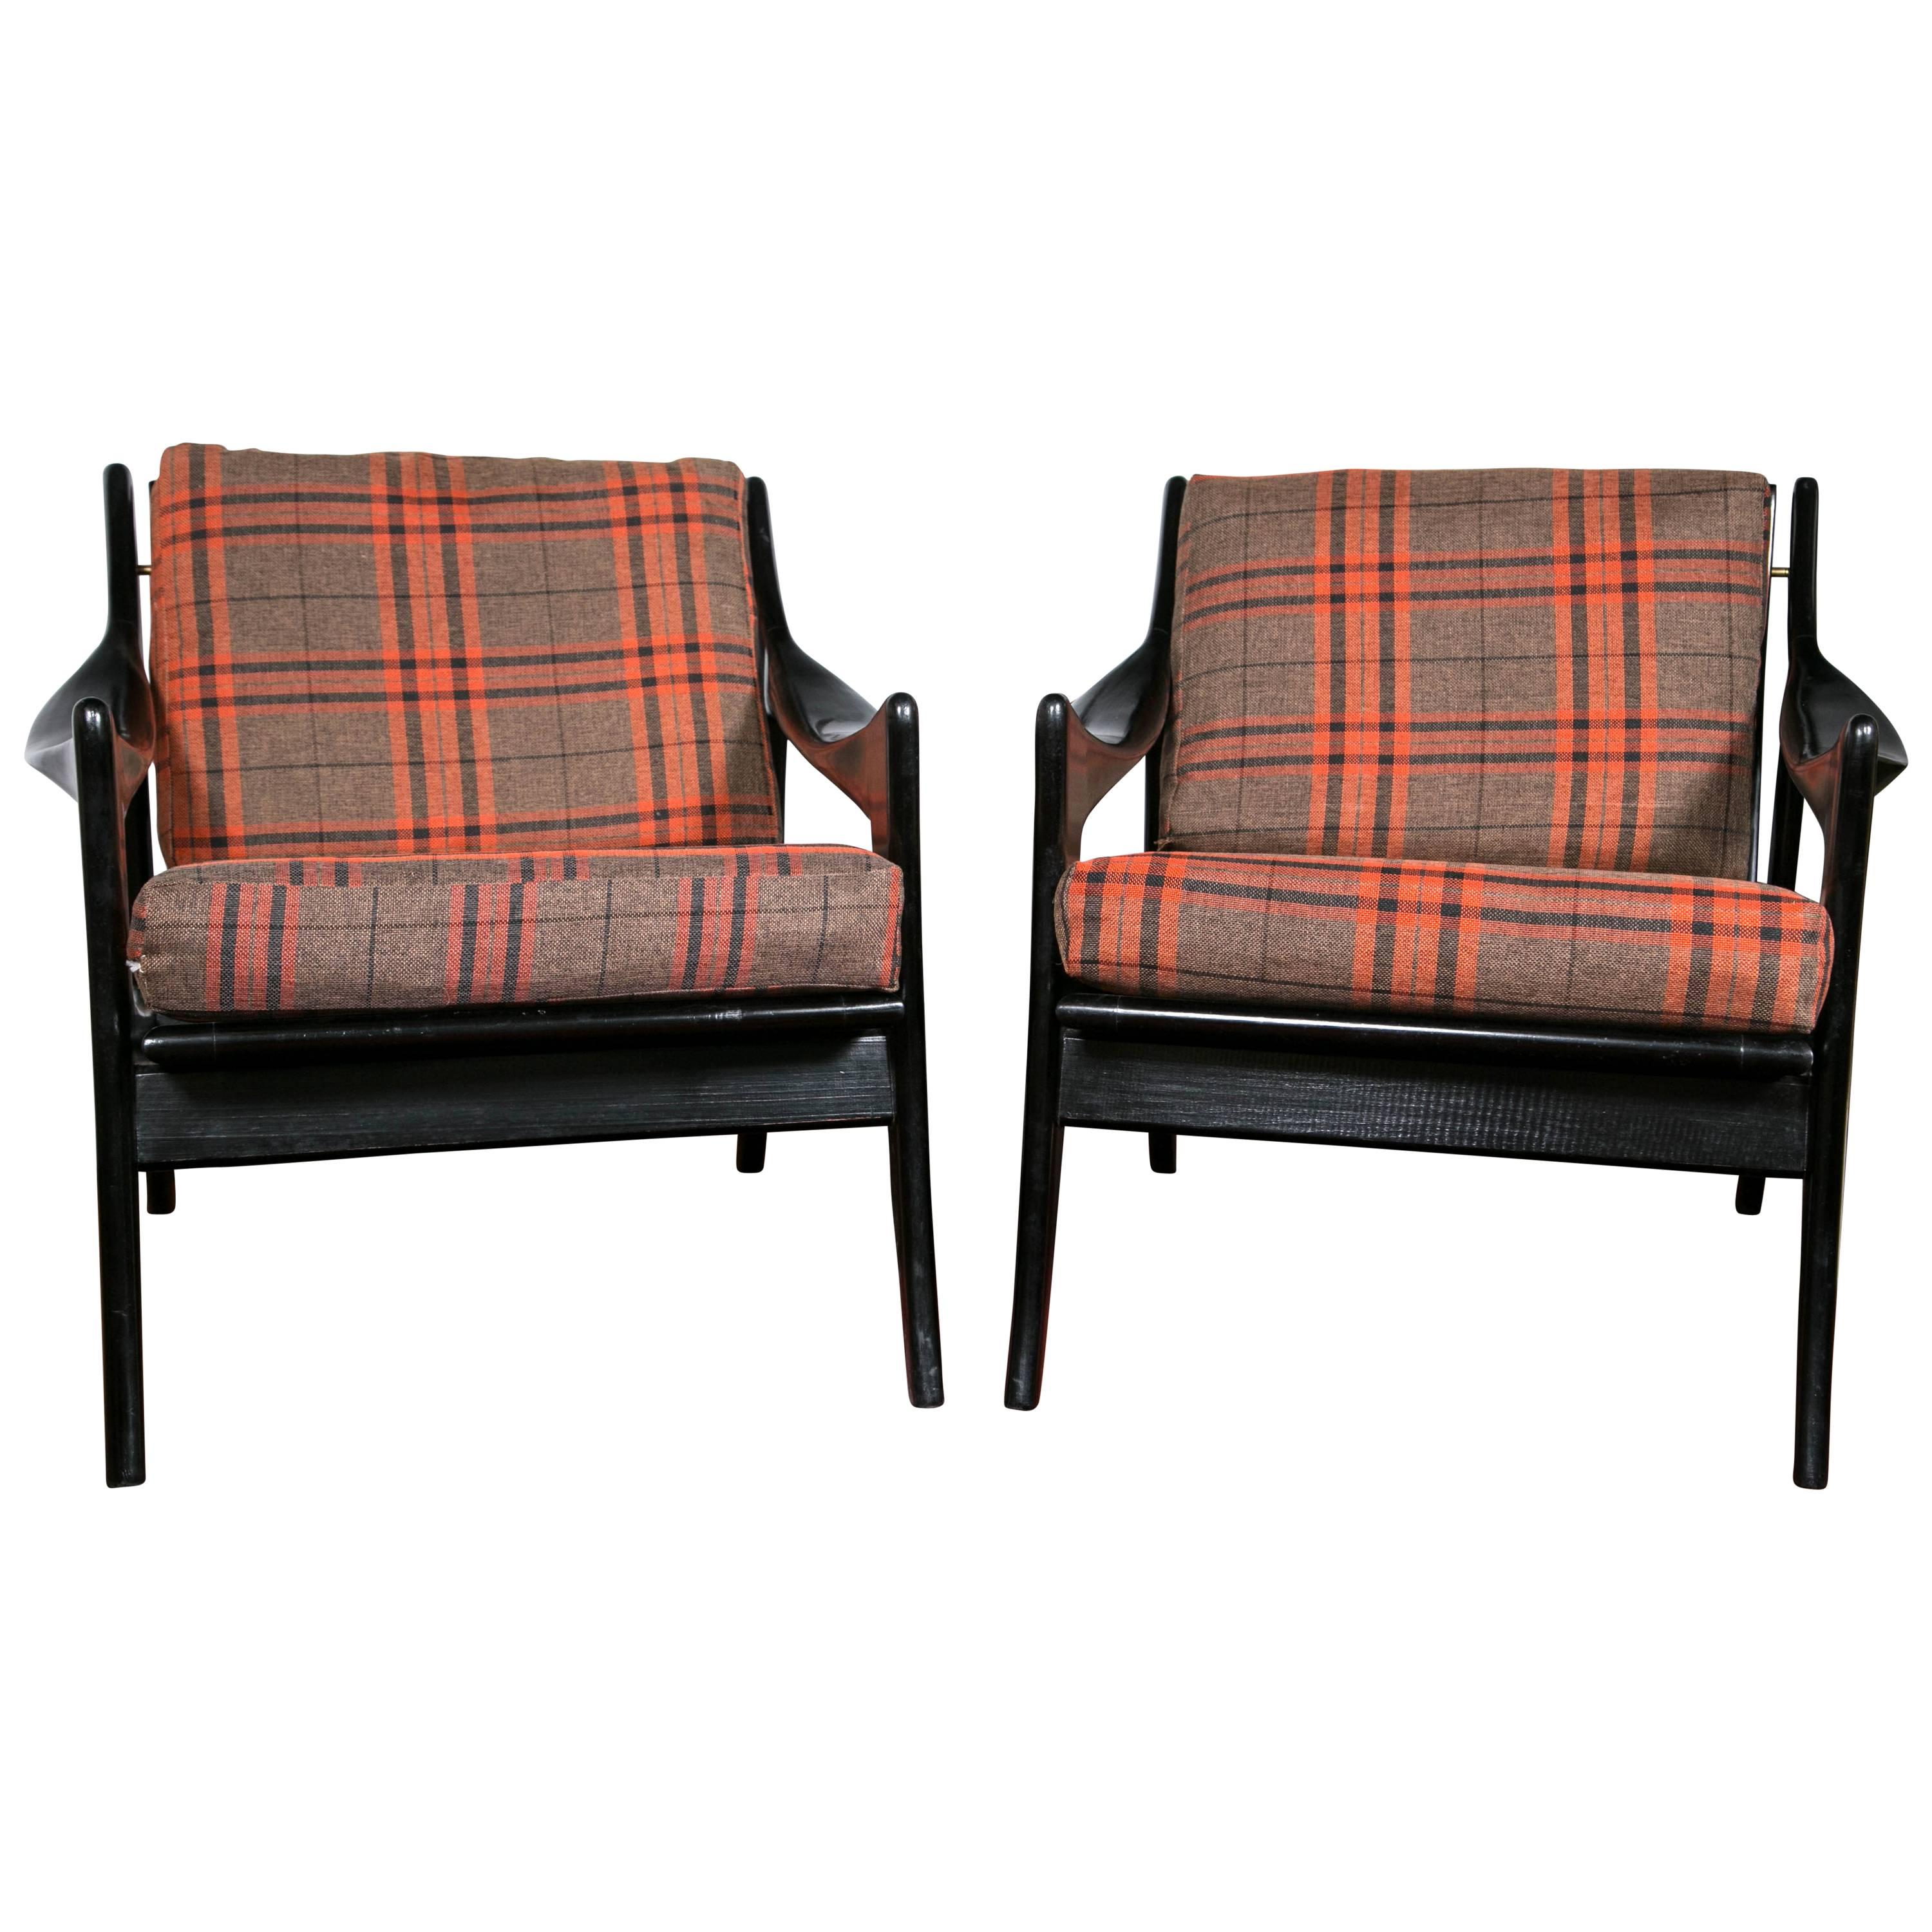 Pair of Danish Mid-Century Modern Ebonized Flannel Upholstered Modern Armchairs